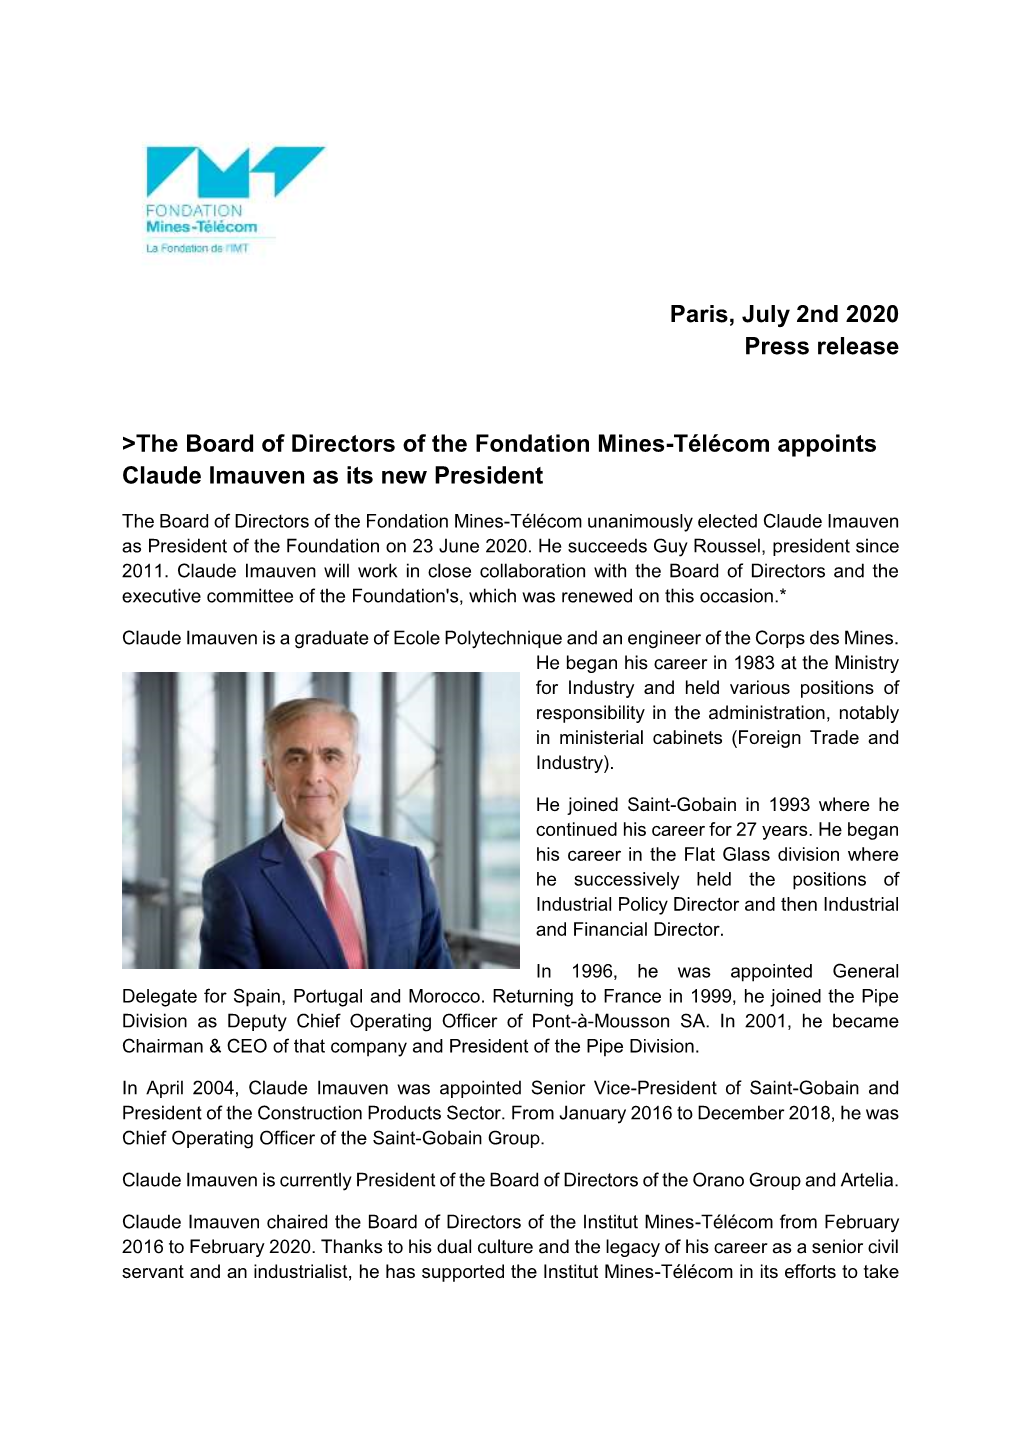 Paris, July 2Nd 2020 Press Release &gt;The Board of Directors of the Fondation Mines-Télécom Appoints Claude Imauven As Its Ne